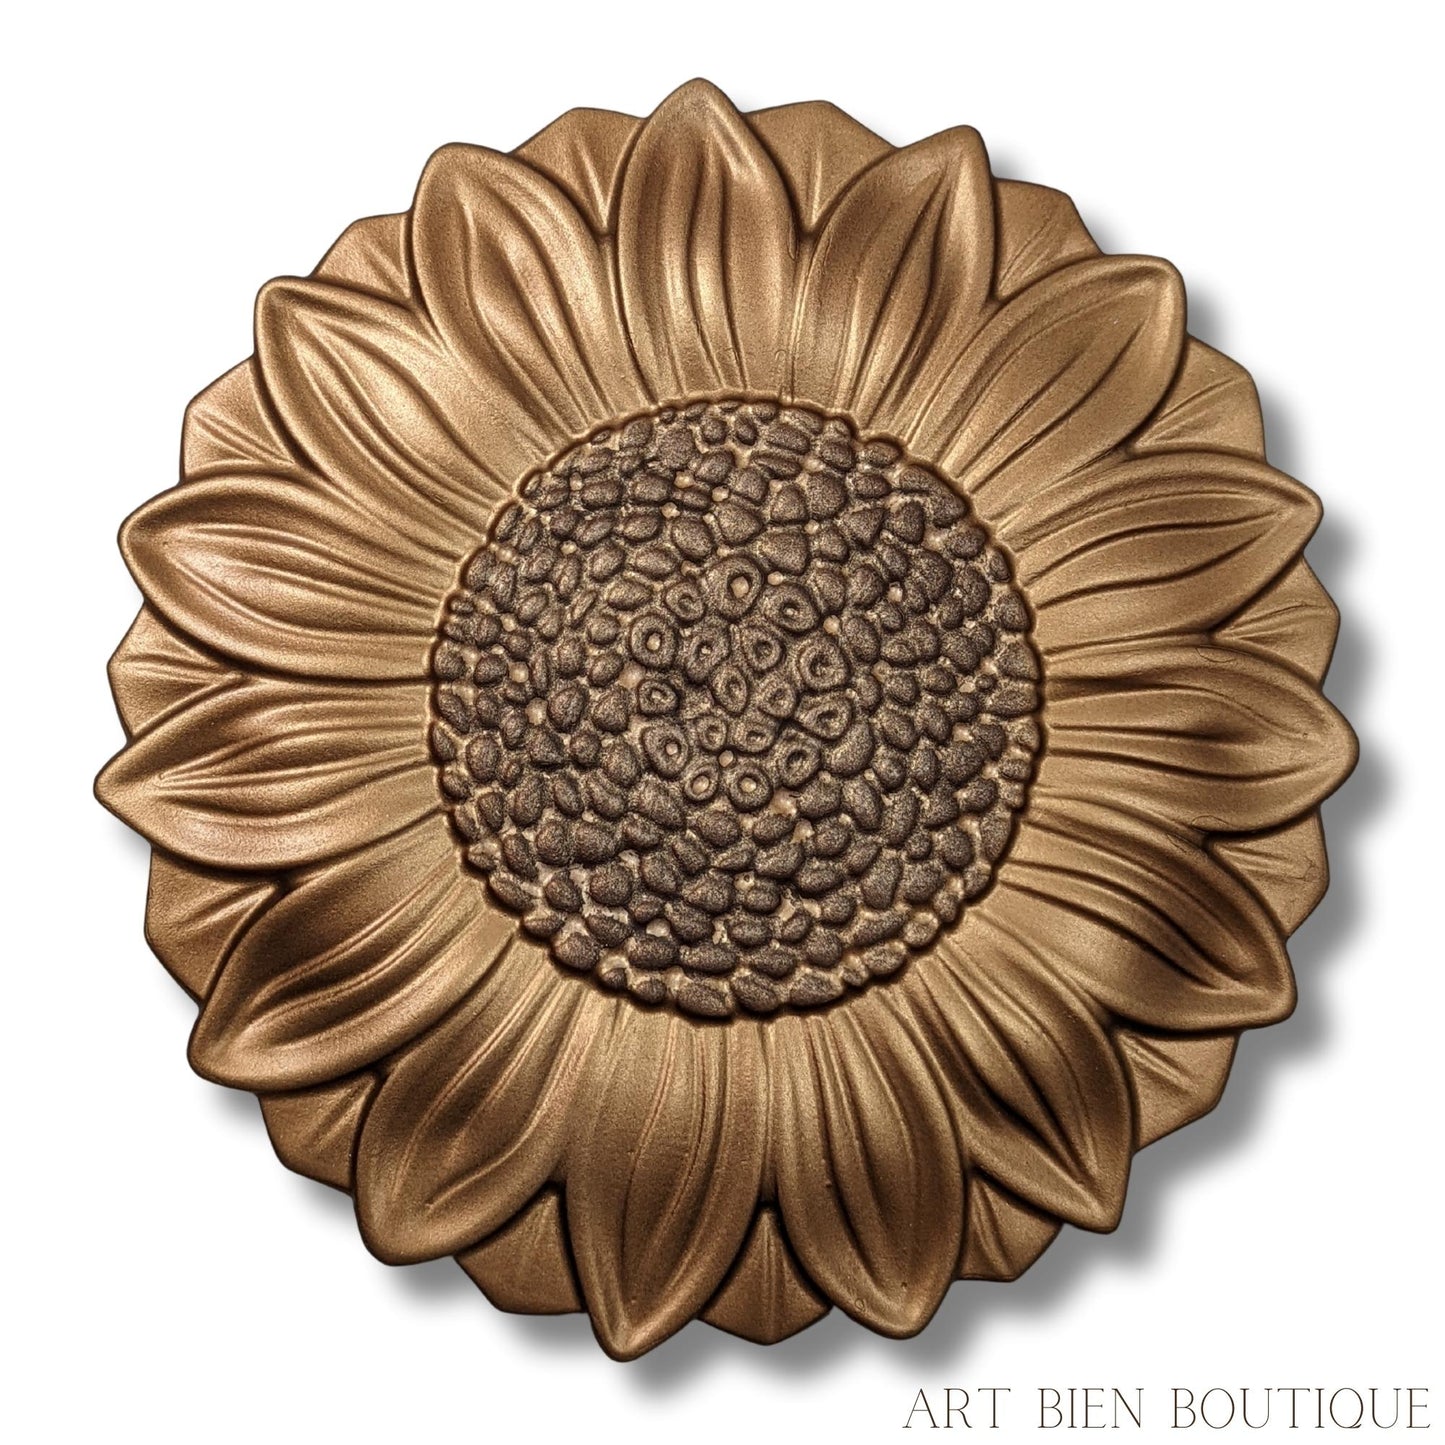 Sunflower - Rosty Market Inc.